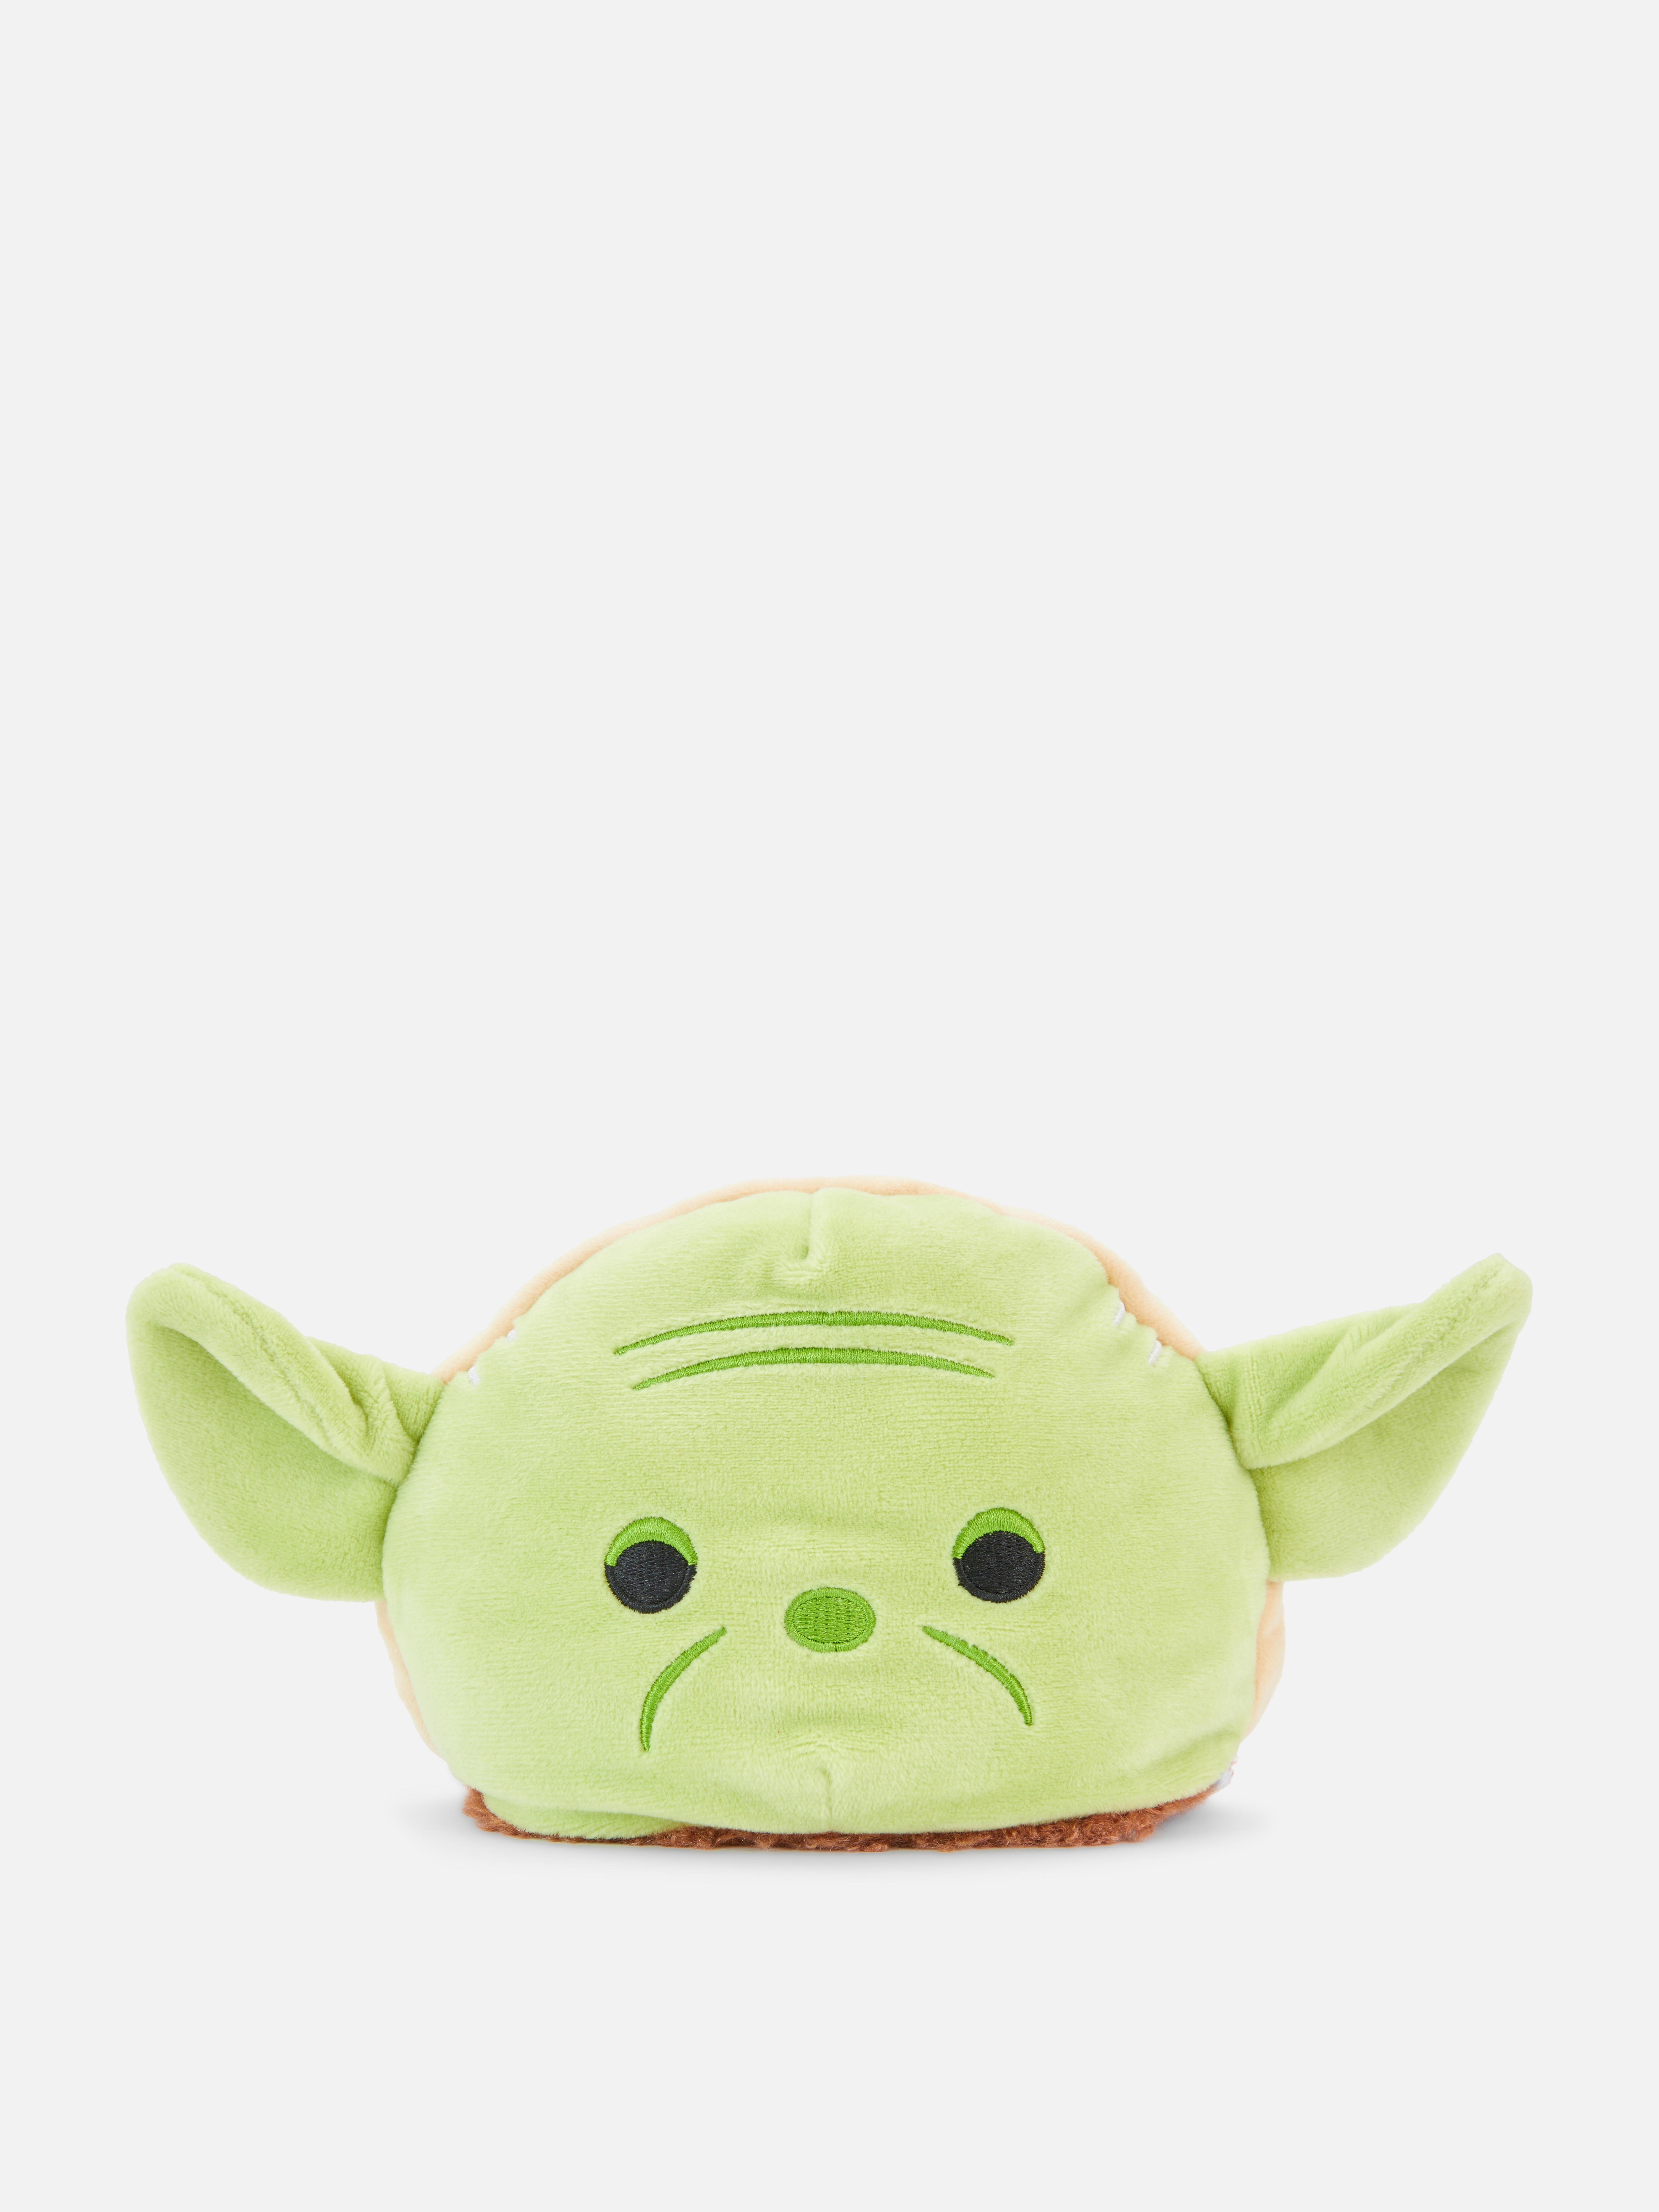 Oboustranný plyšák Star Wars Baby Yoda